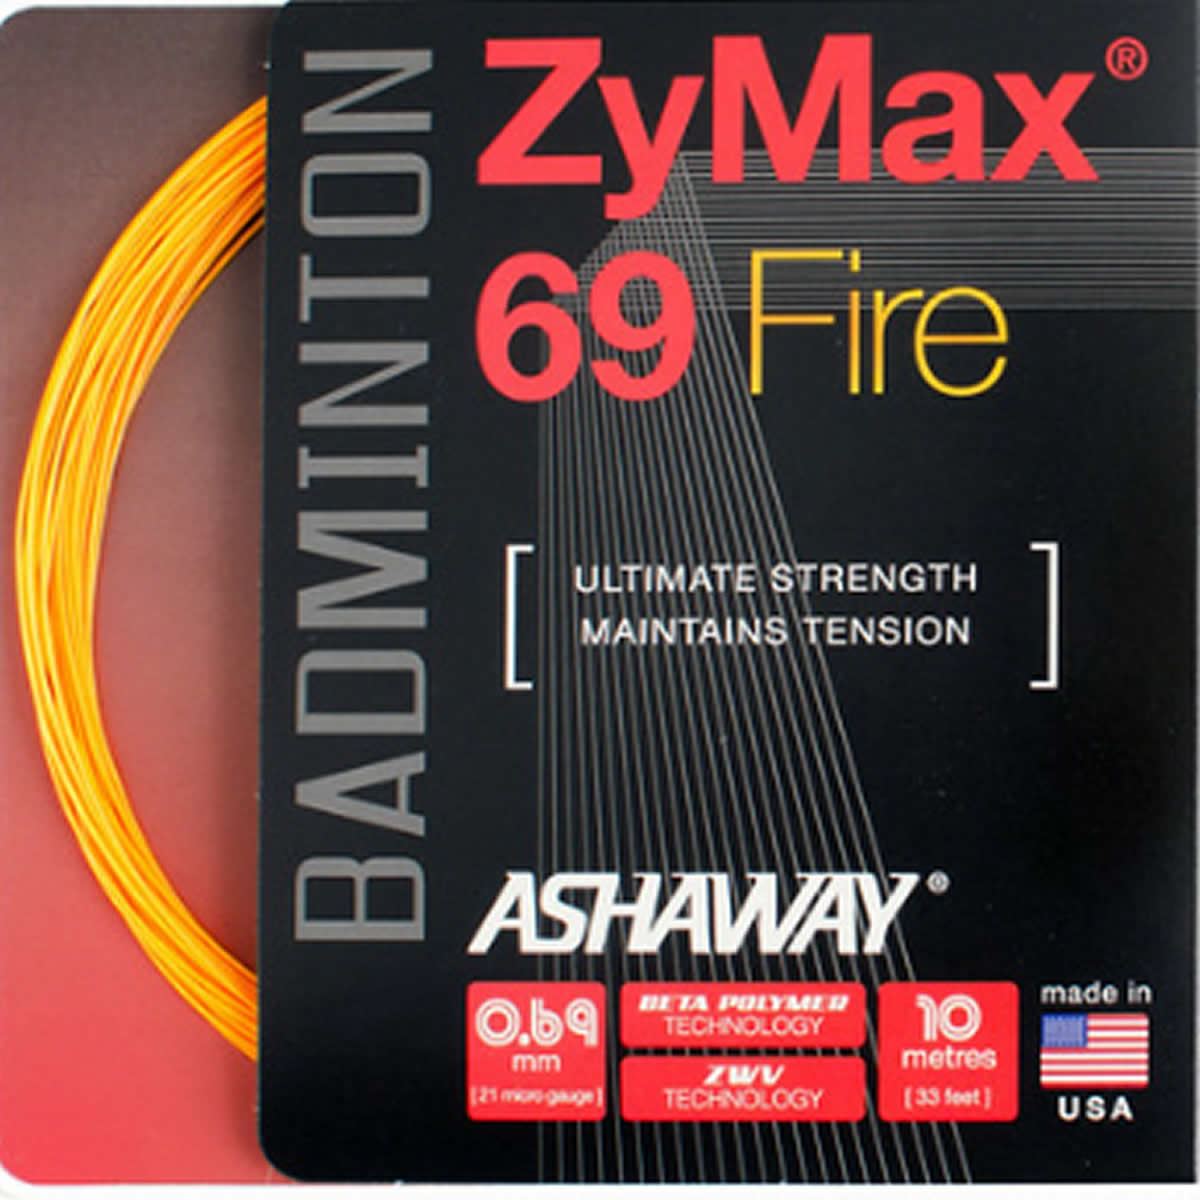 Ashaway Zymax 69 Fire Badminton String Orange - 0.69MM - 10m Packet